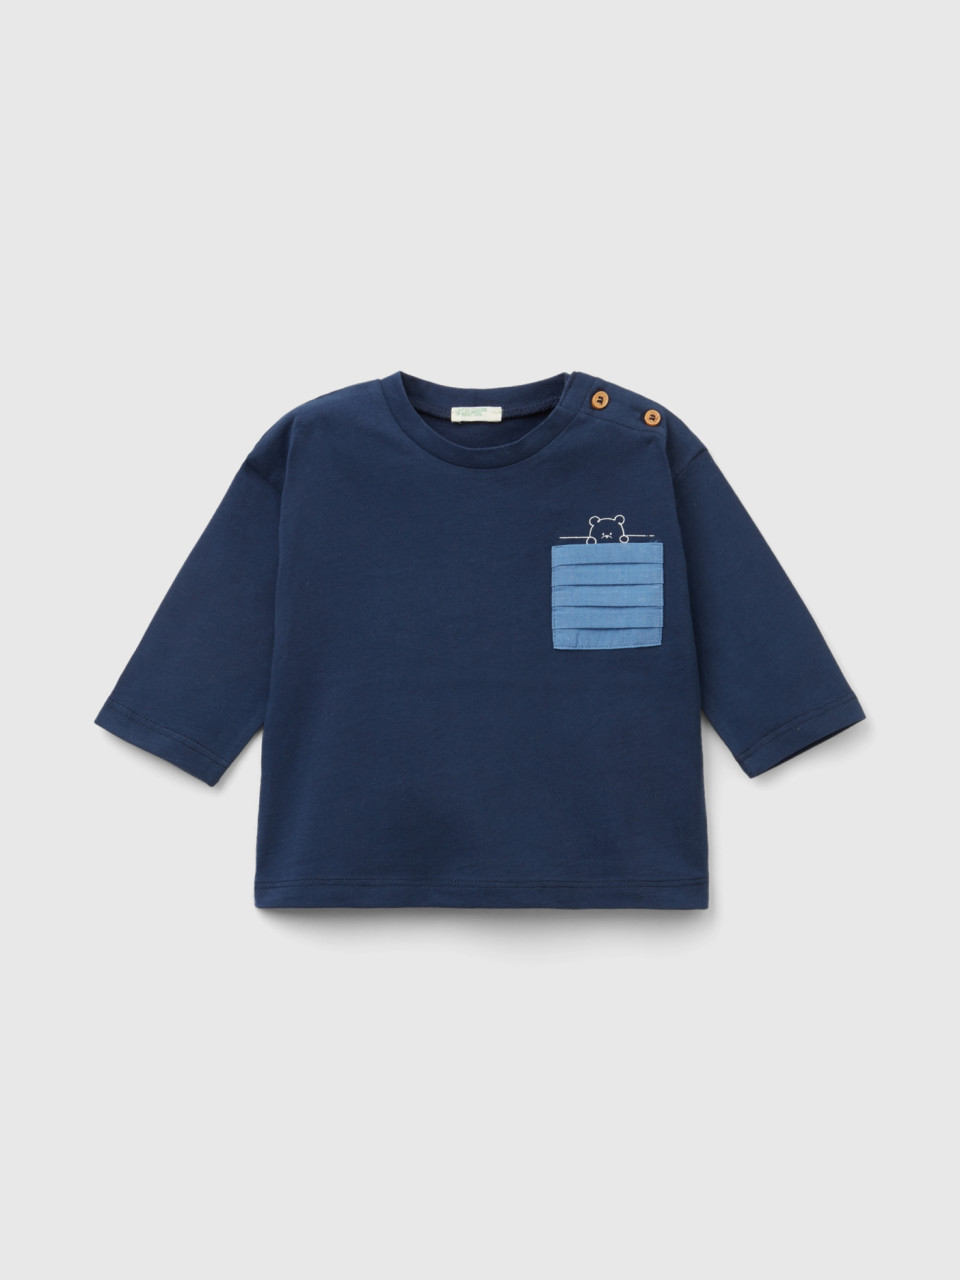 Benetton, T-shirt With Pleated Pocket, Dark Blue, Kids